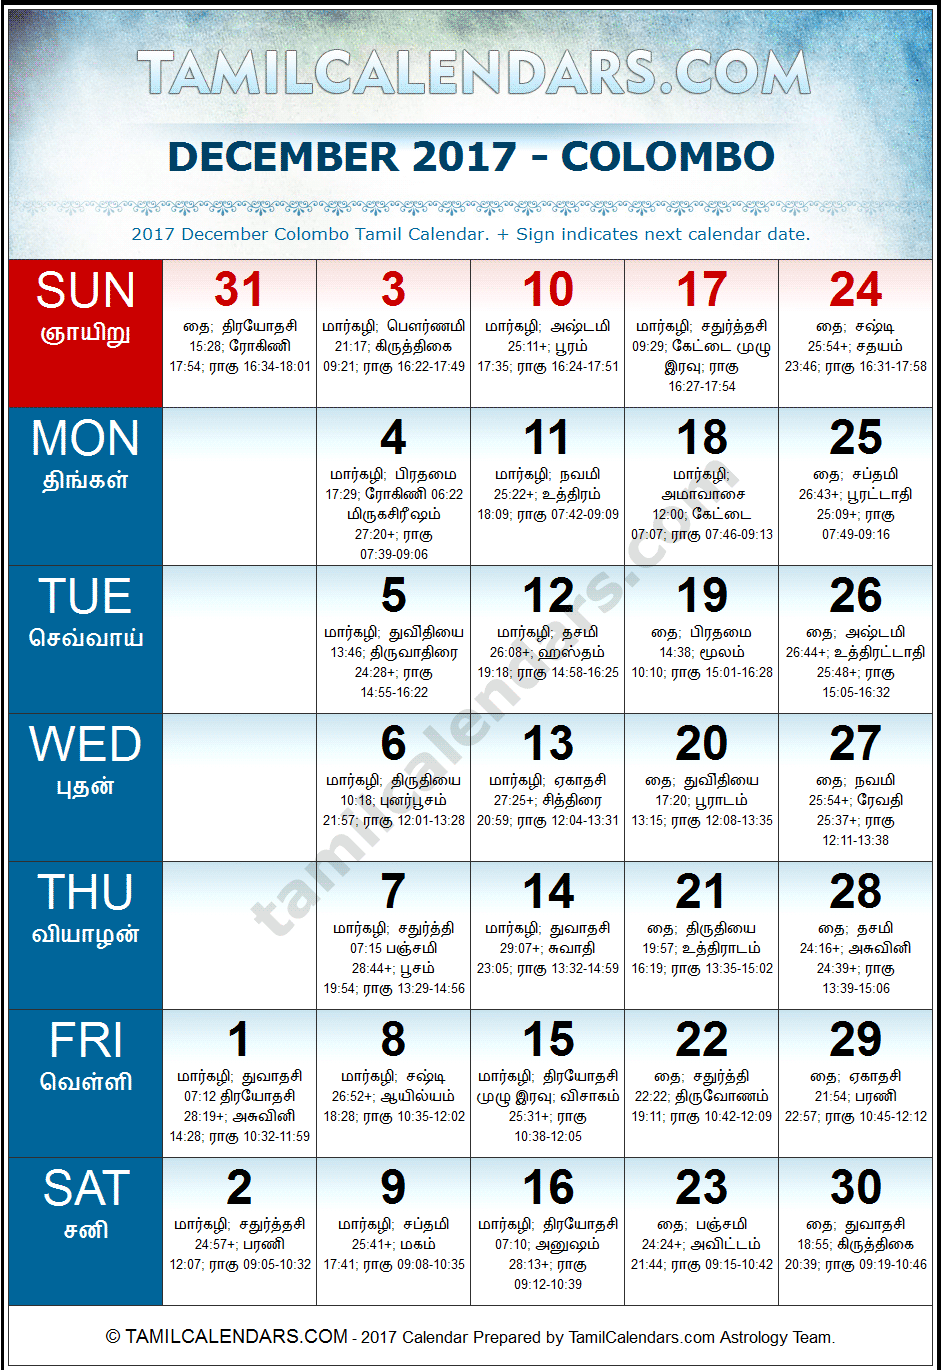 December 2017 Tamil Calendar for Sri Lanka (Colombo)